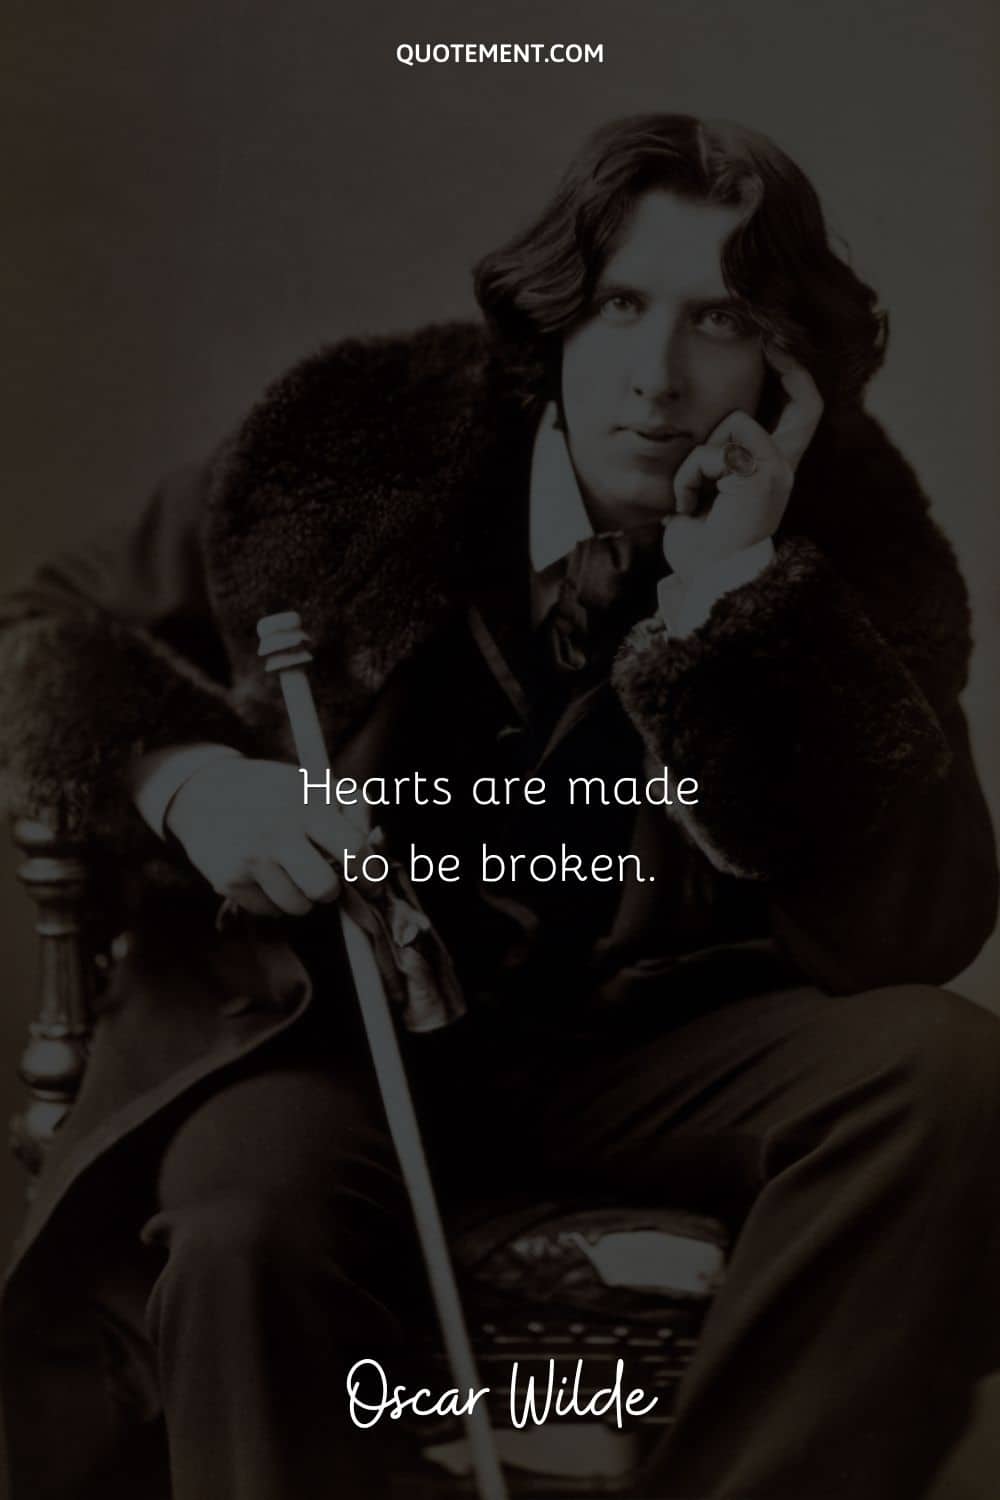 “Hearts are made to be broken.” ― Oscar Wilde (De Profundis)